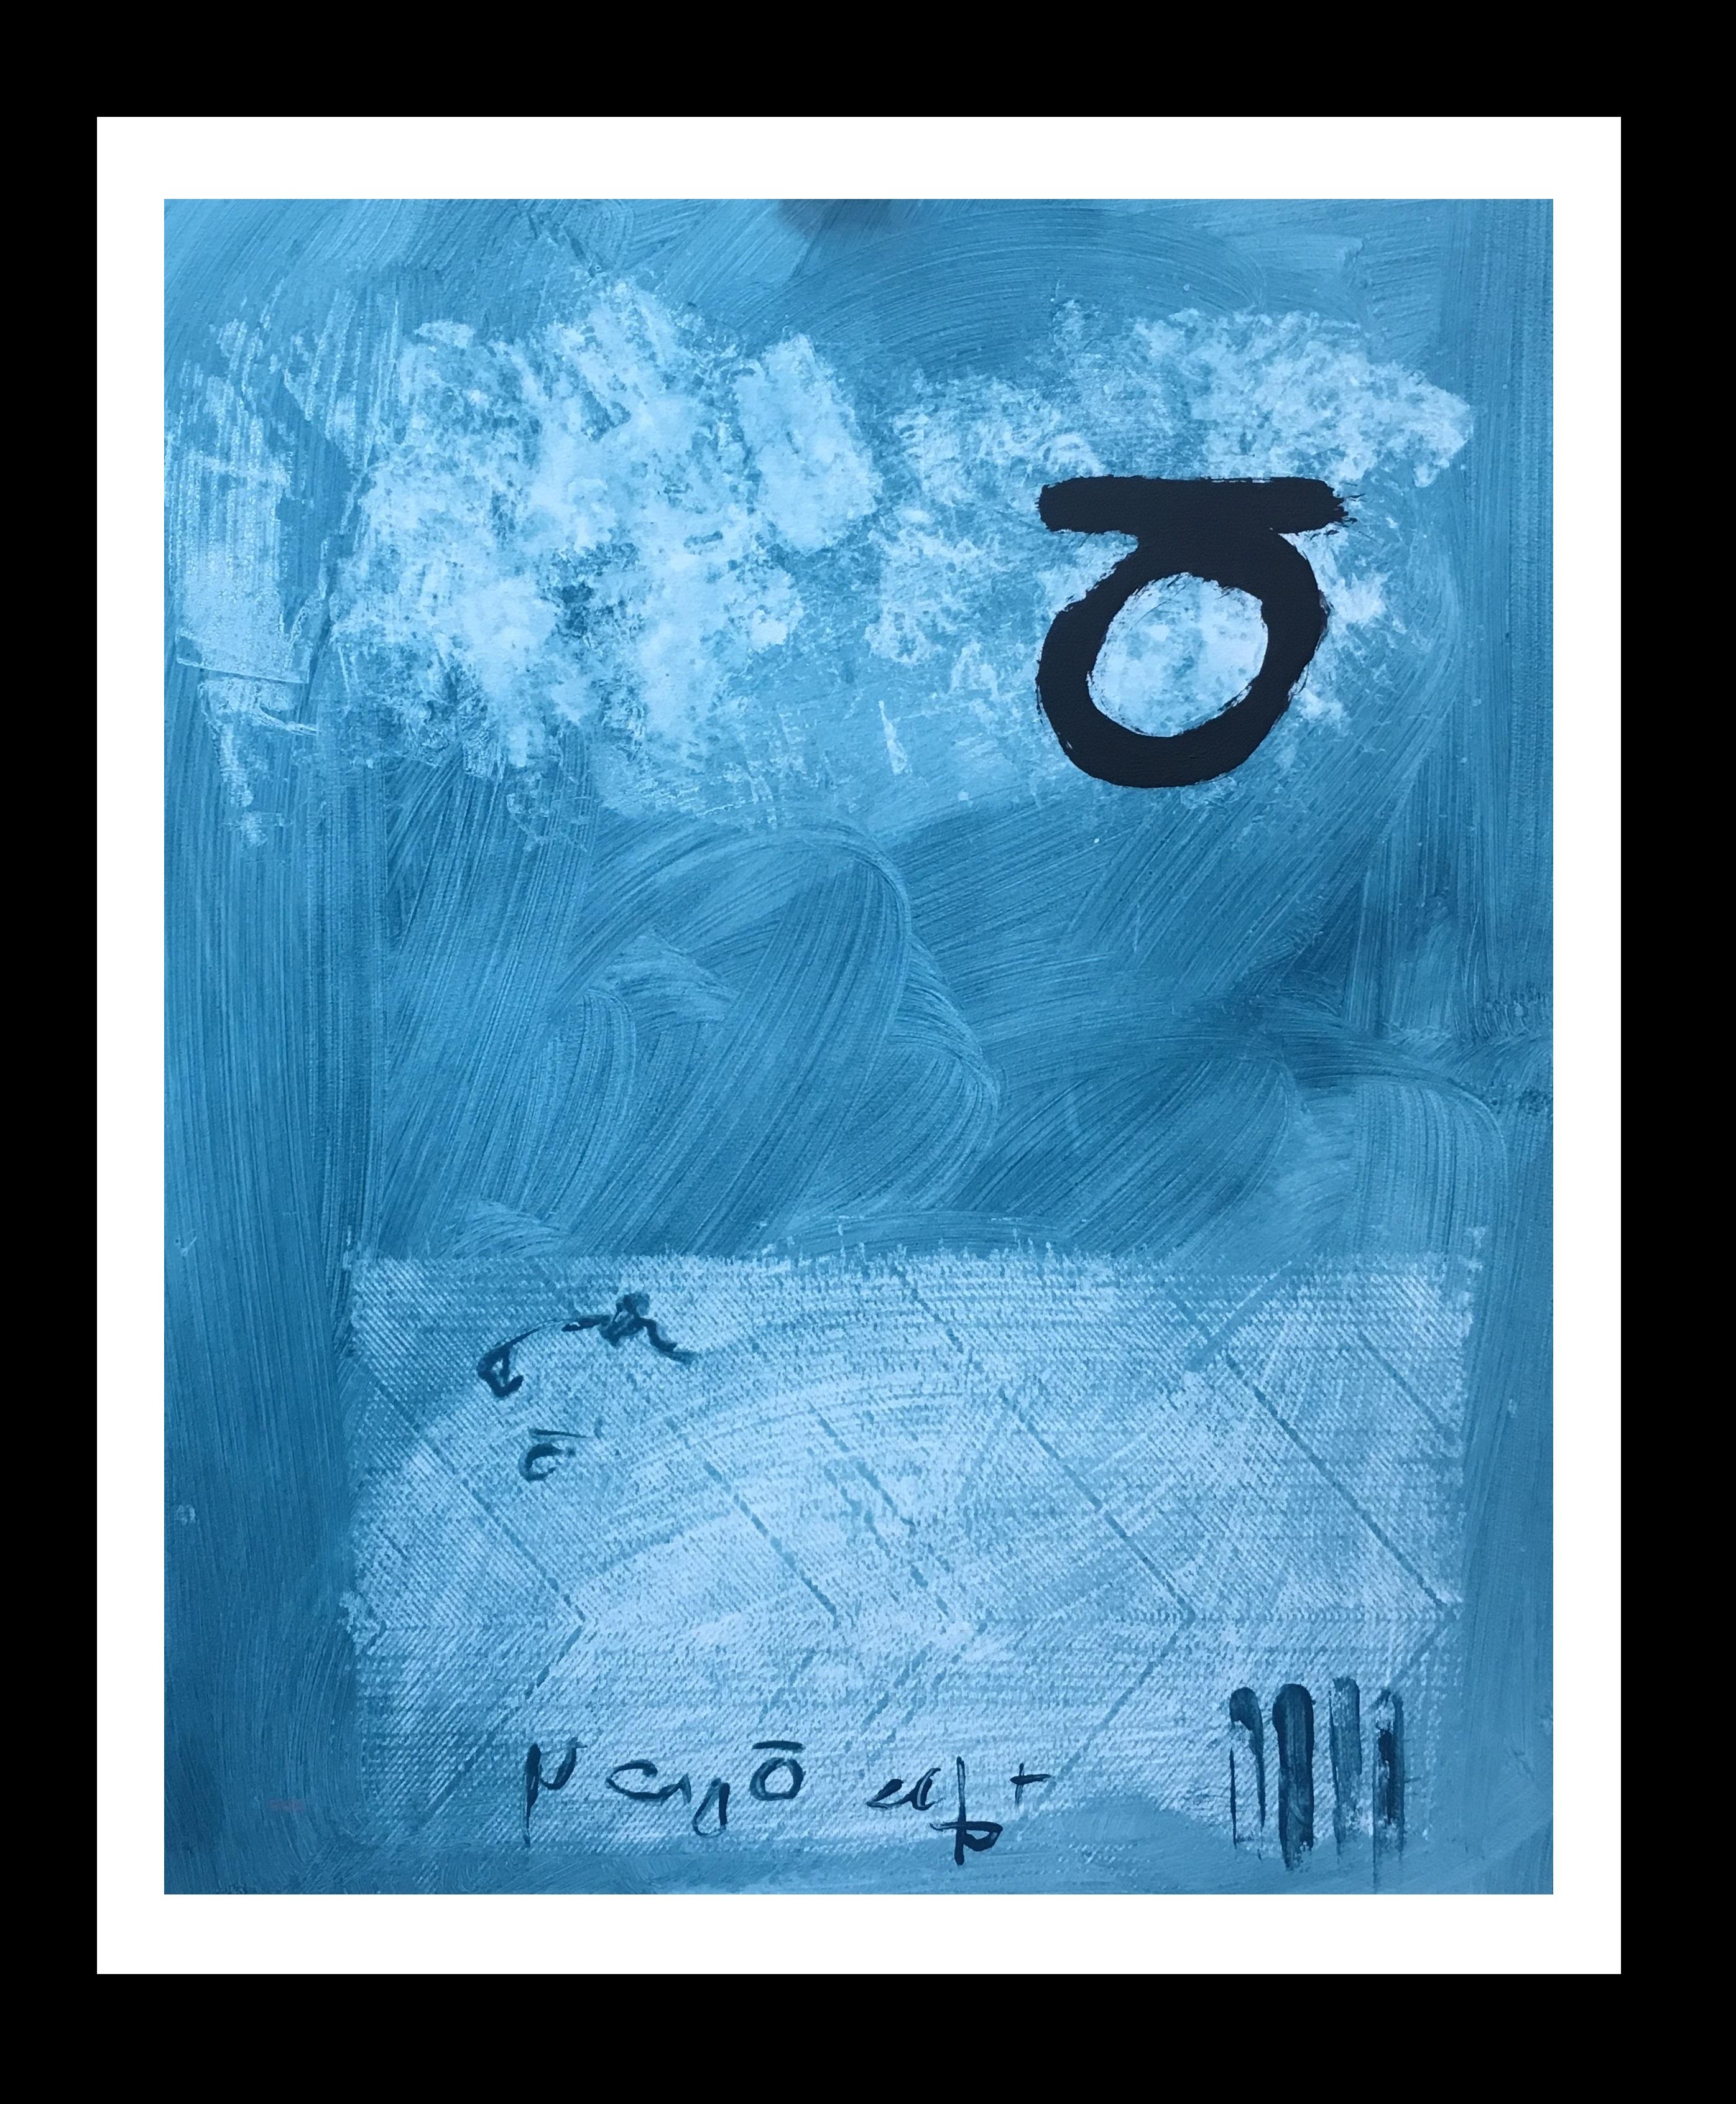 RAFAEL RUZ Abstract Painting - Ruz  Vertical  Blue Black   Abstract Acrylic on paper Painting